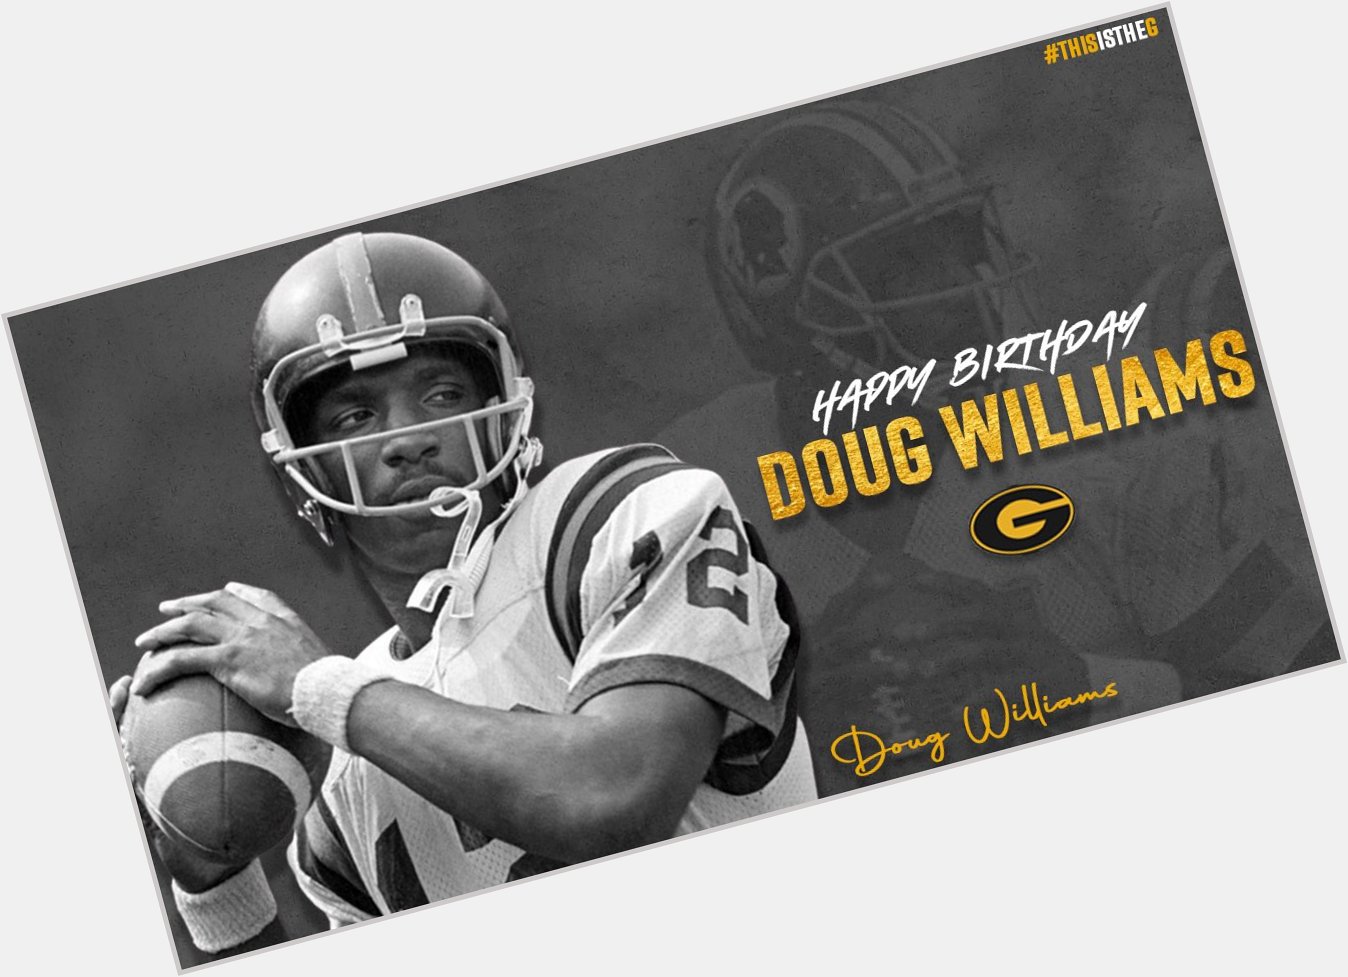 Sending Happy Birthday wishes to former Grambling State legendary quarterback Doug Williams 